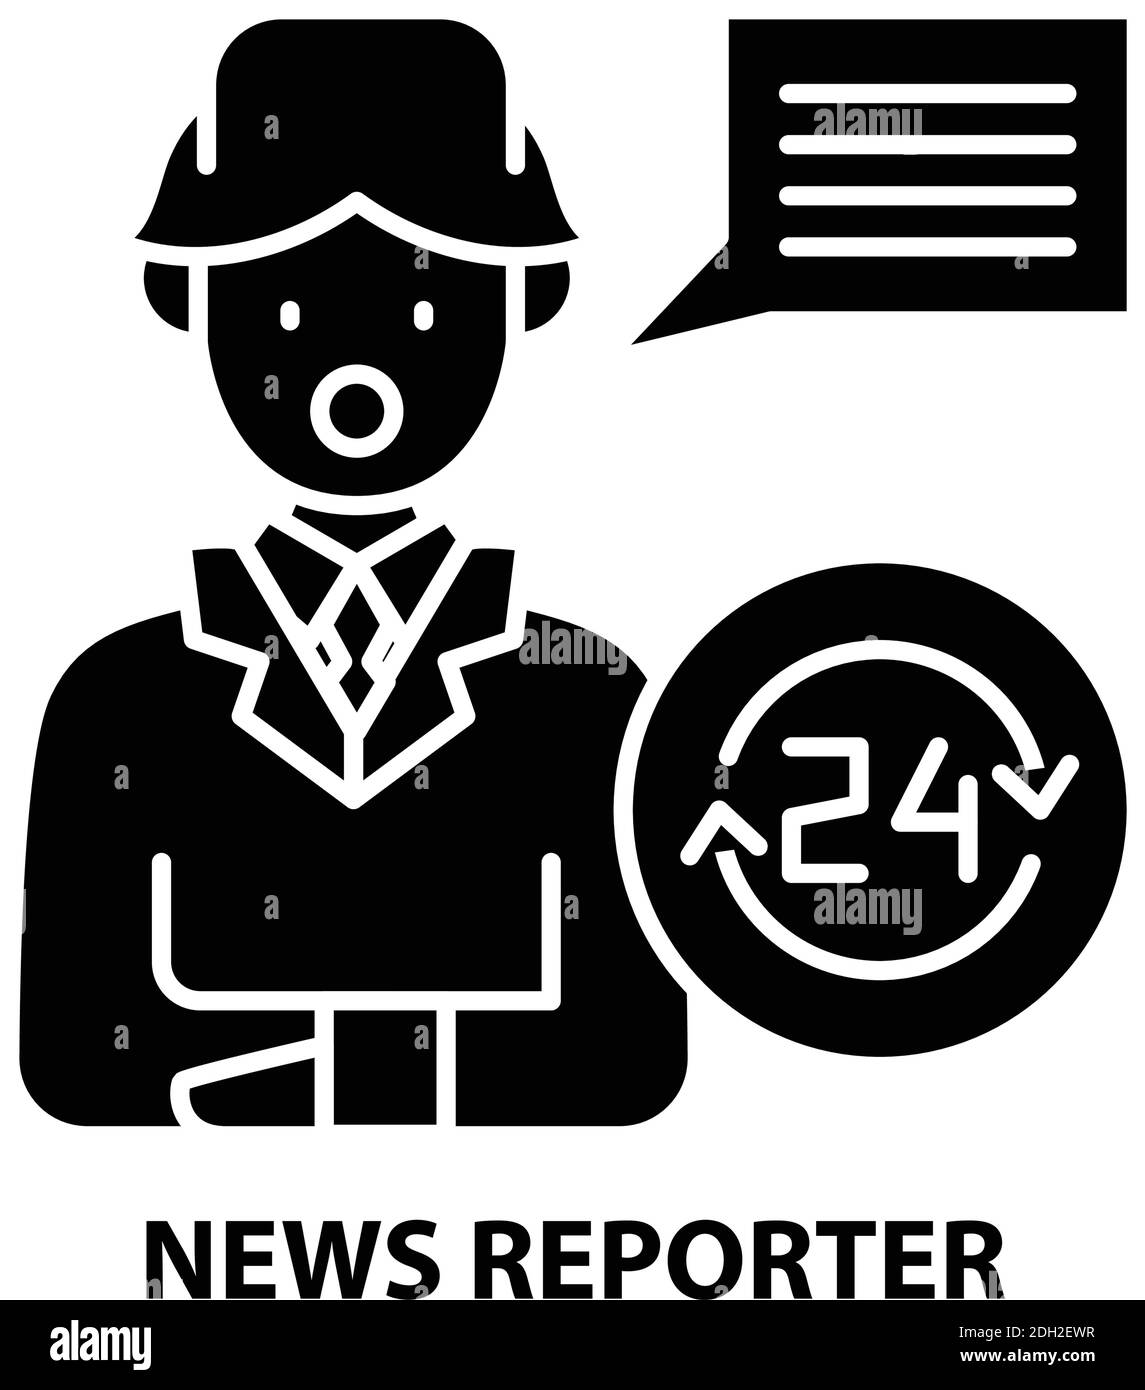 news reporter icon, black vector sign with editable strokes, concept illustration Stock Vector